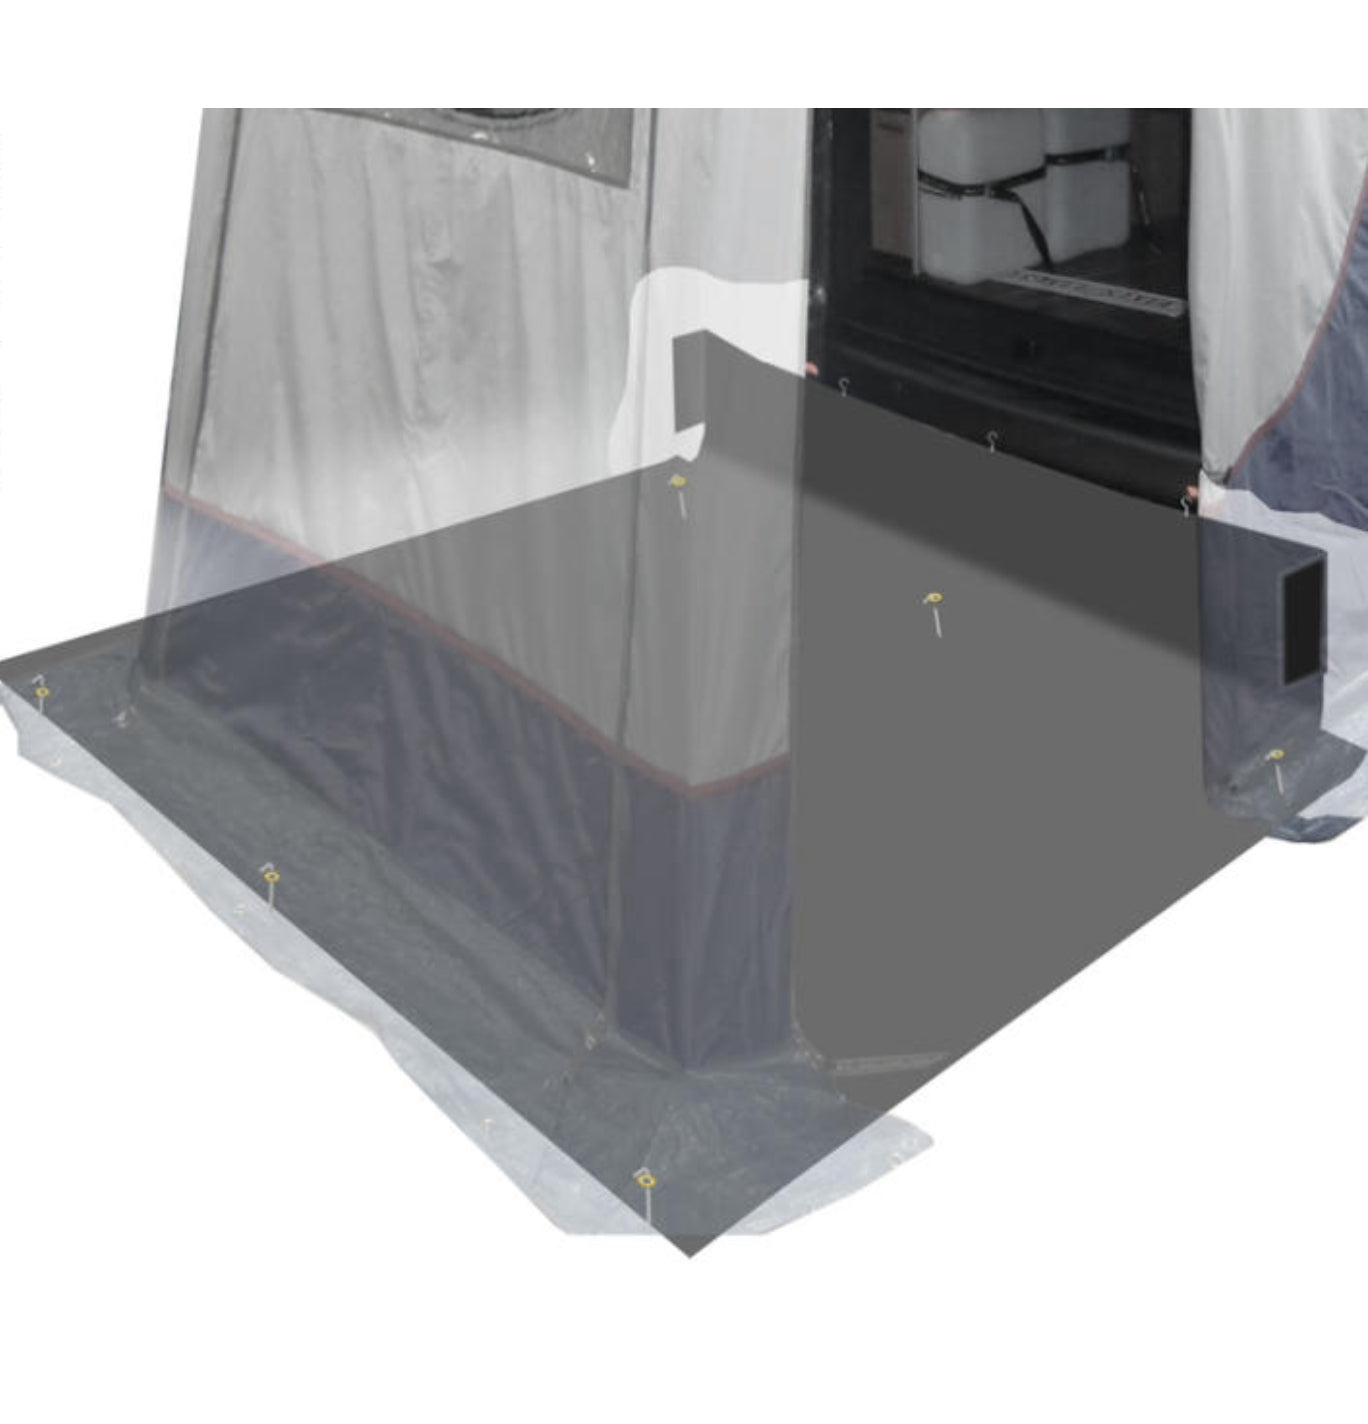 Reimo Upgrade & Update Tailgate Tent Ground Sheet Image